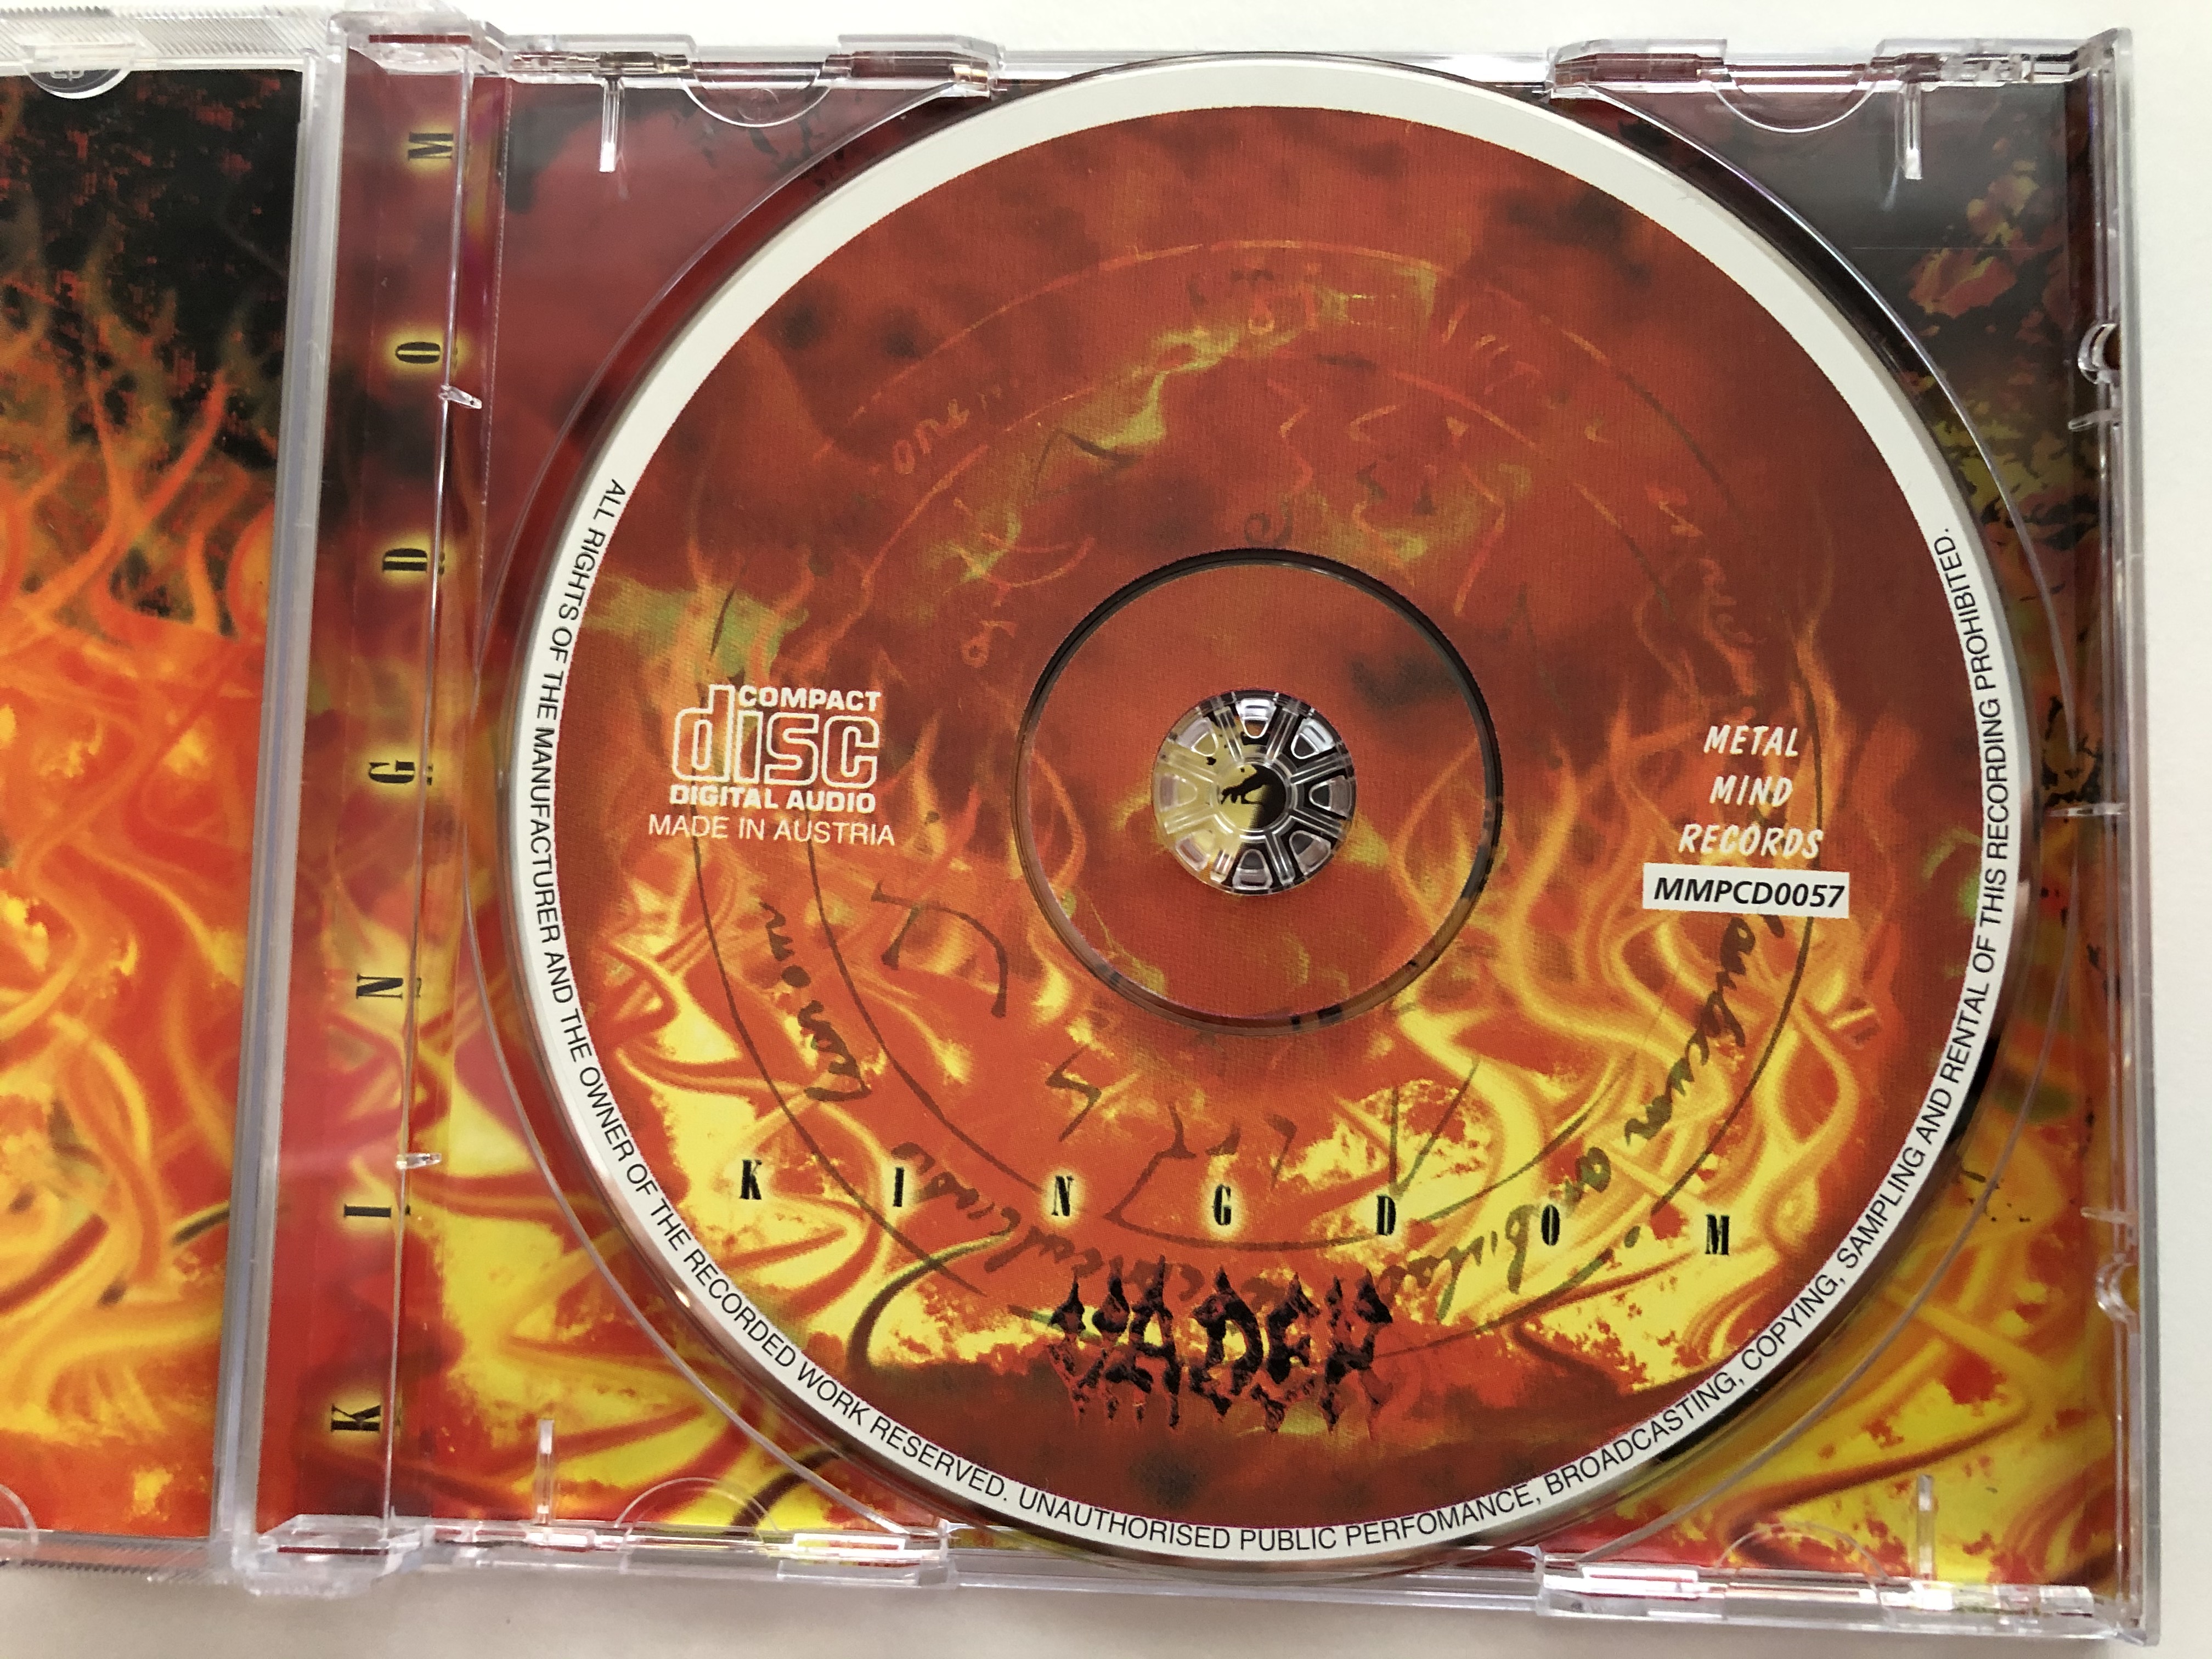 vader-kingdom-metal-mind-records-audio-cd-mmpcd0057-3-.jpg